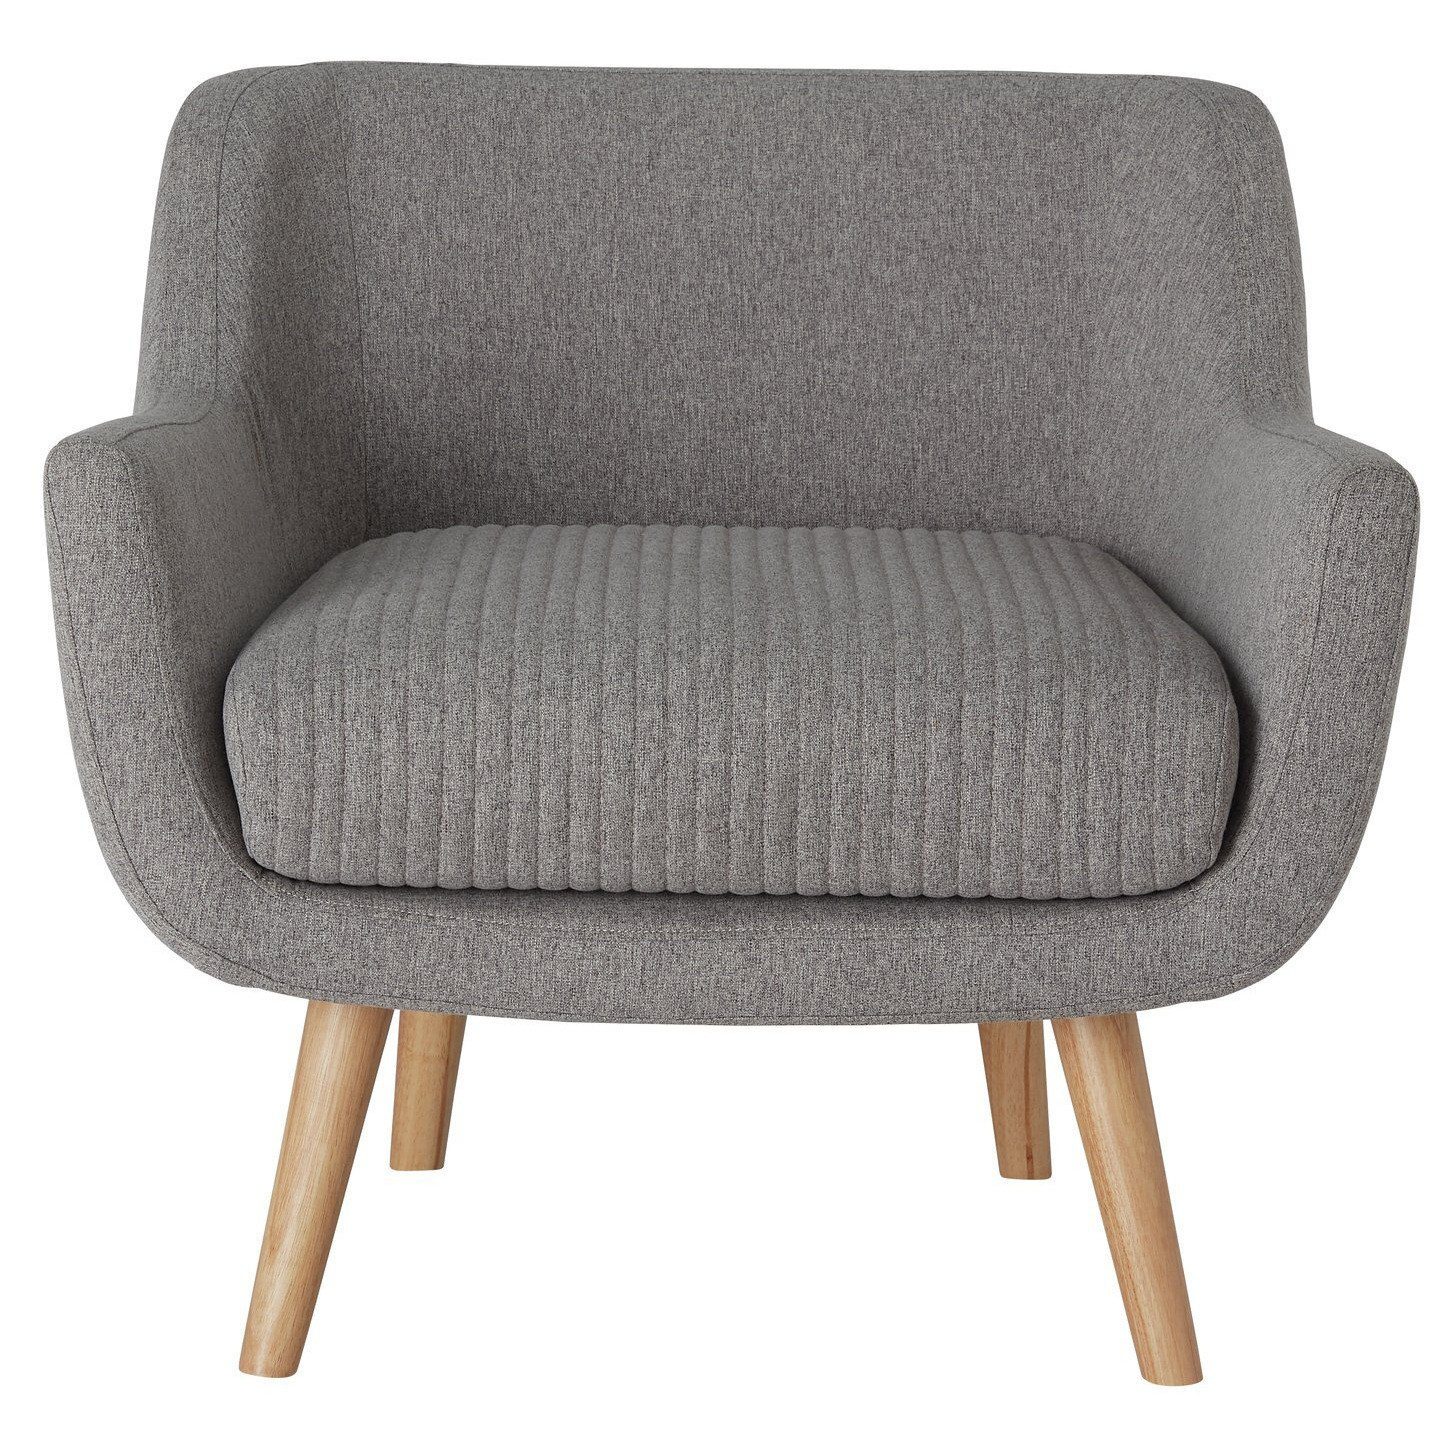 Habitat Nellie Fabric Accent Chair - Grey - image 1